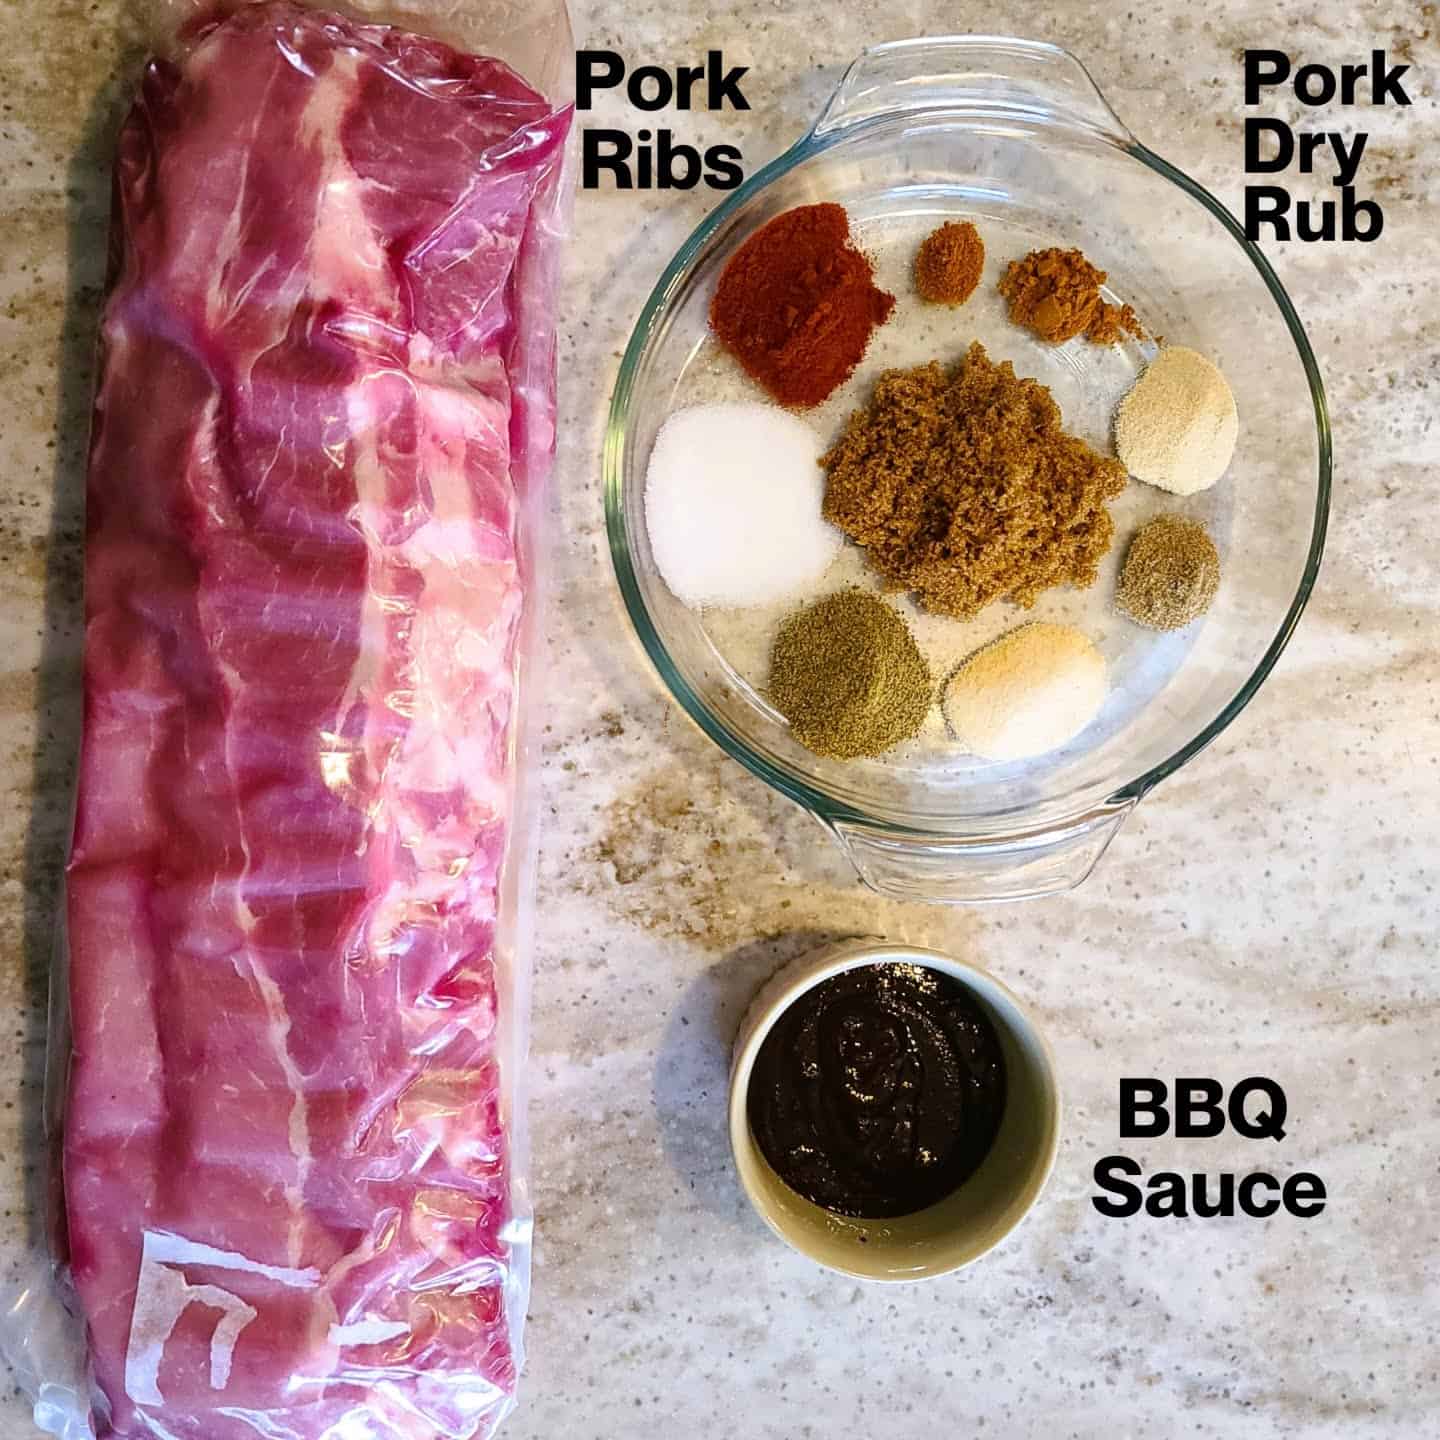  smoked pork ribs ingredients